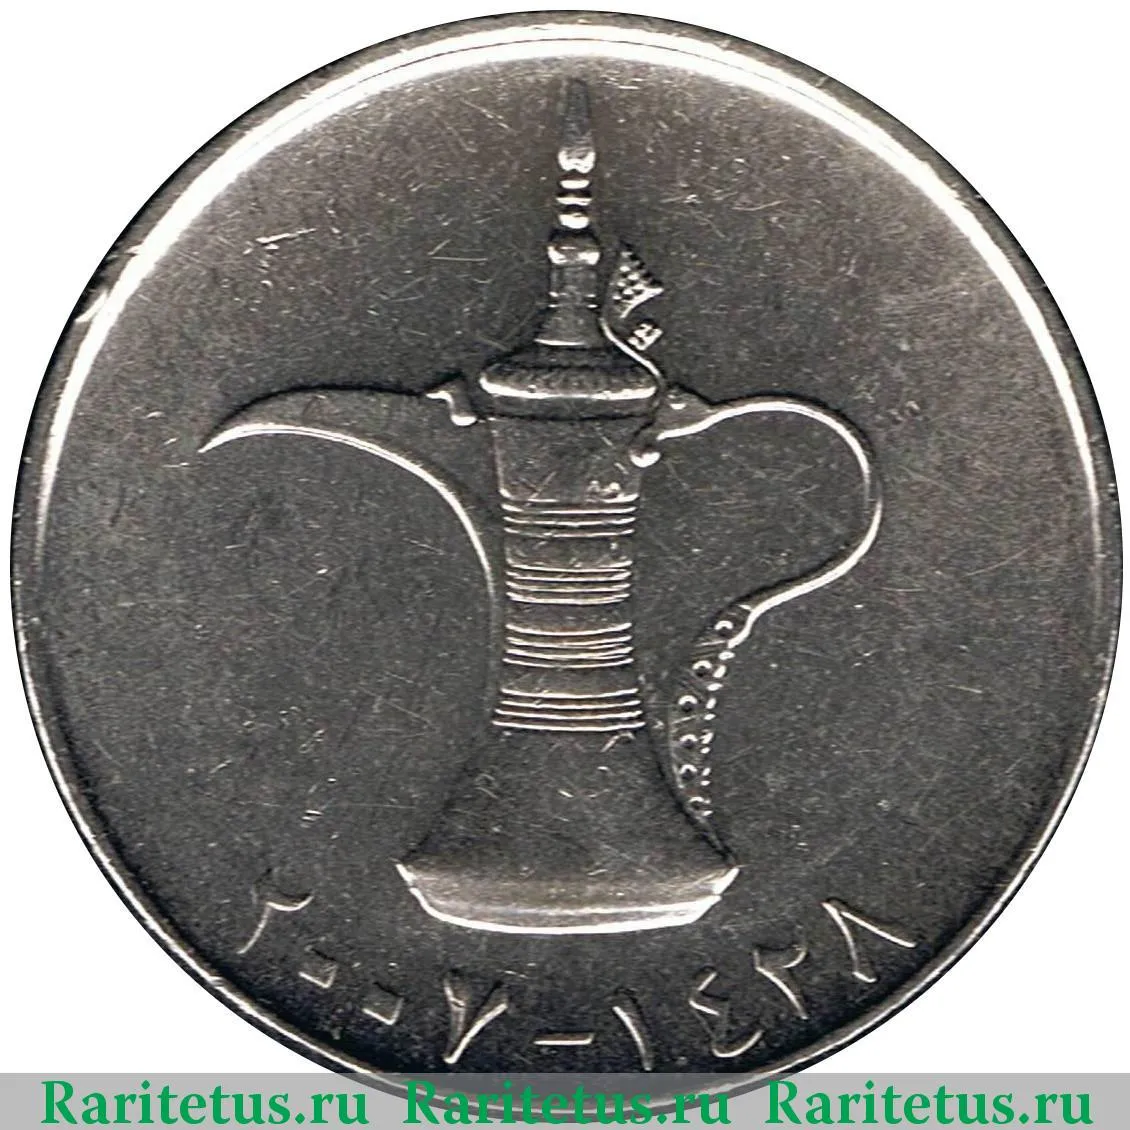 15 дирхам сколько. Монета United arab Emirates 2007 1428. Дирхам ОАЭ монеты. 1 Дирхам 2007 ОАЭ. Старинные арабские монеты.